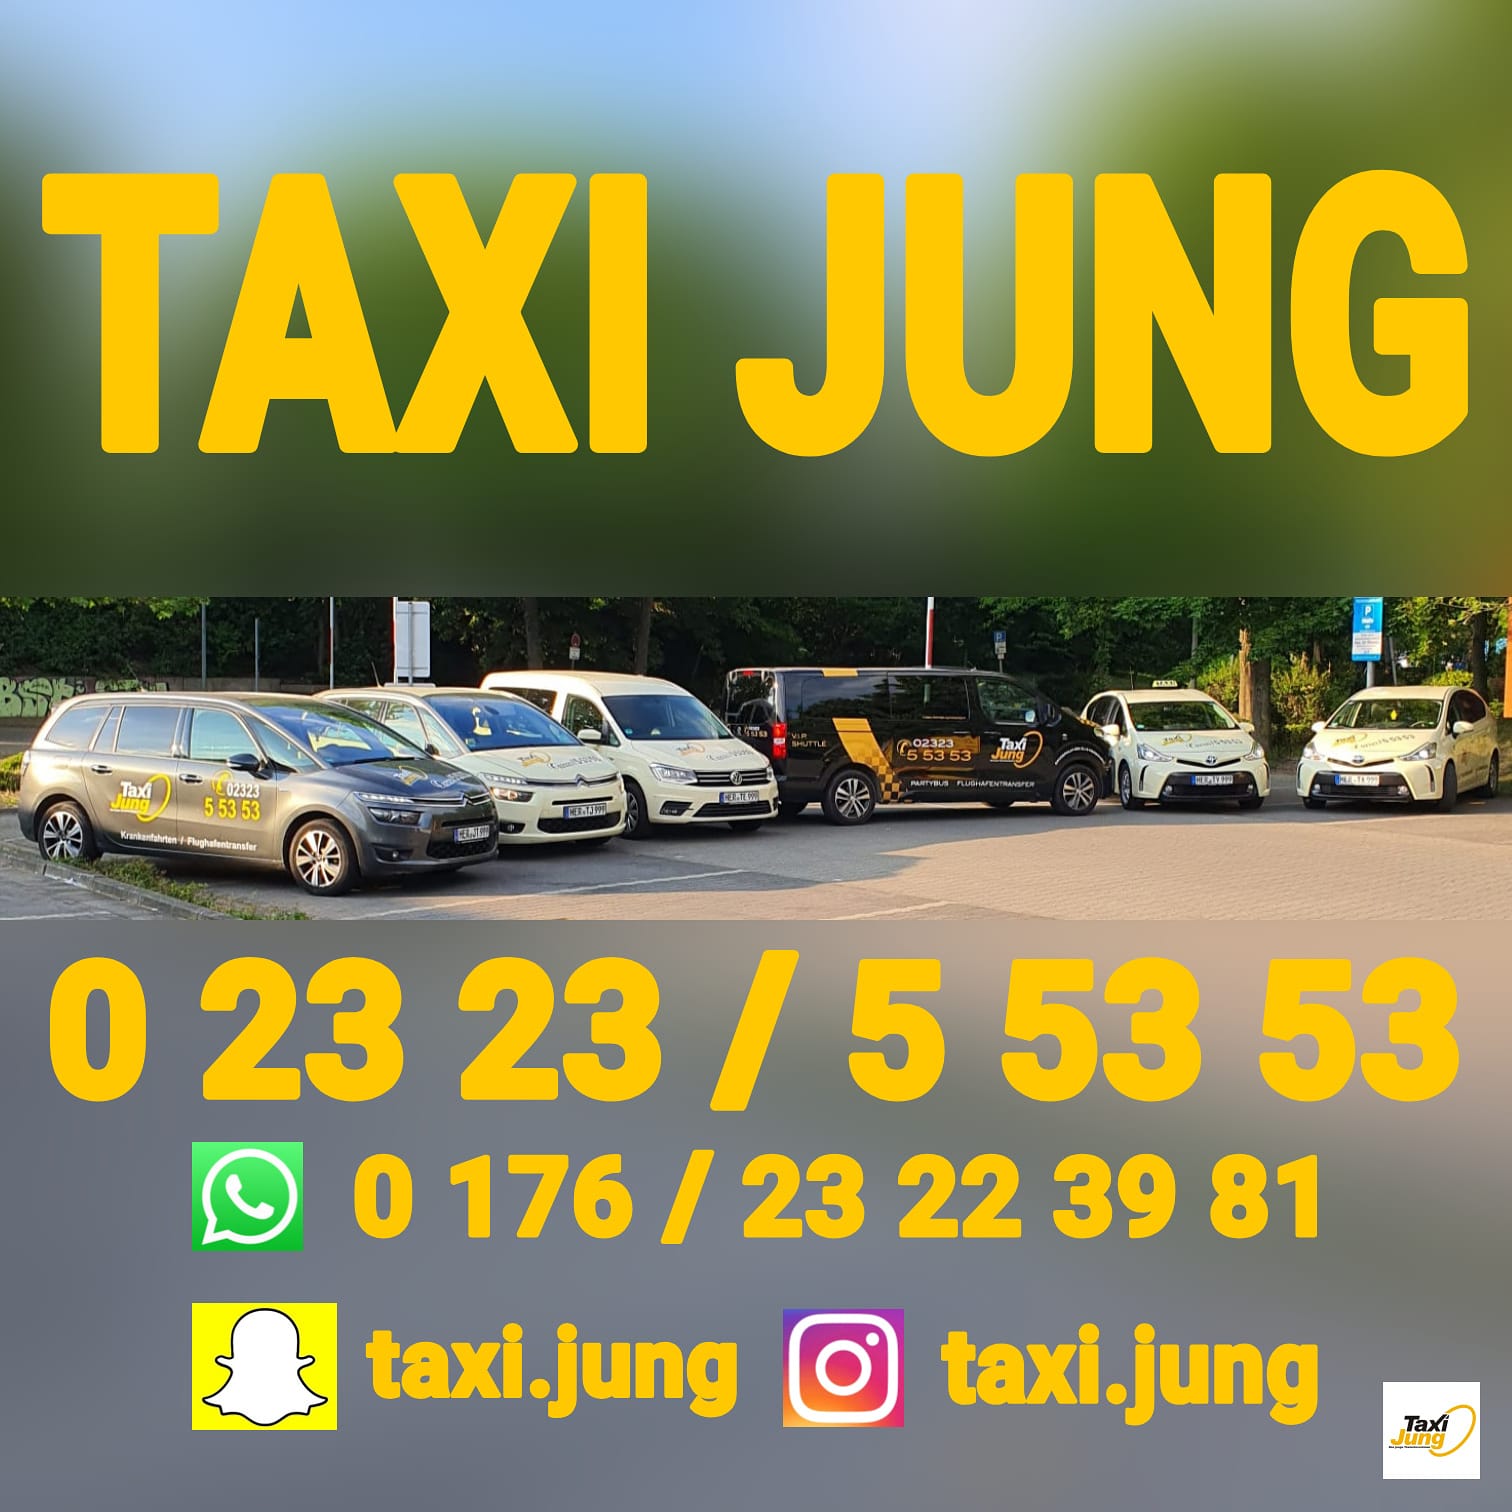 Bild 36 Emre Üstünkul Taxibetrieb Taxi Jung in Herne